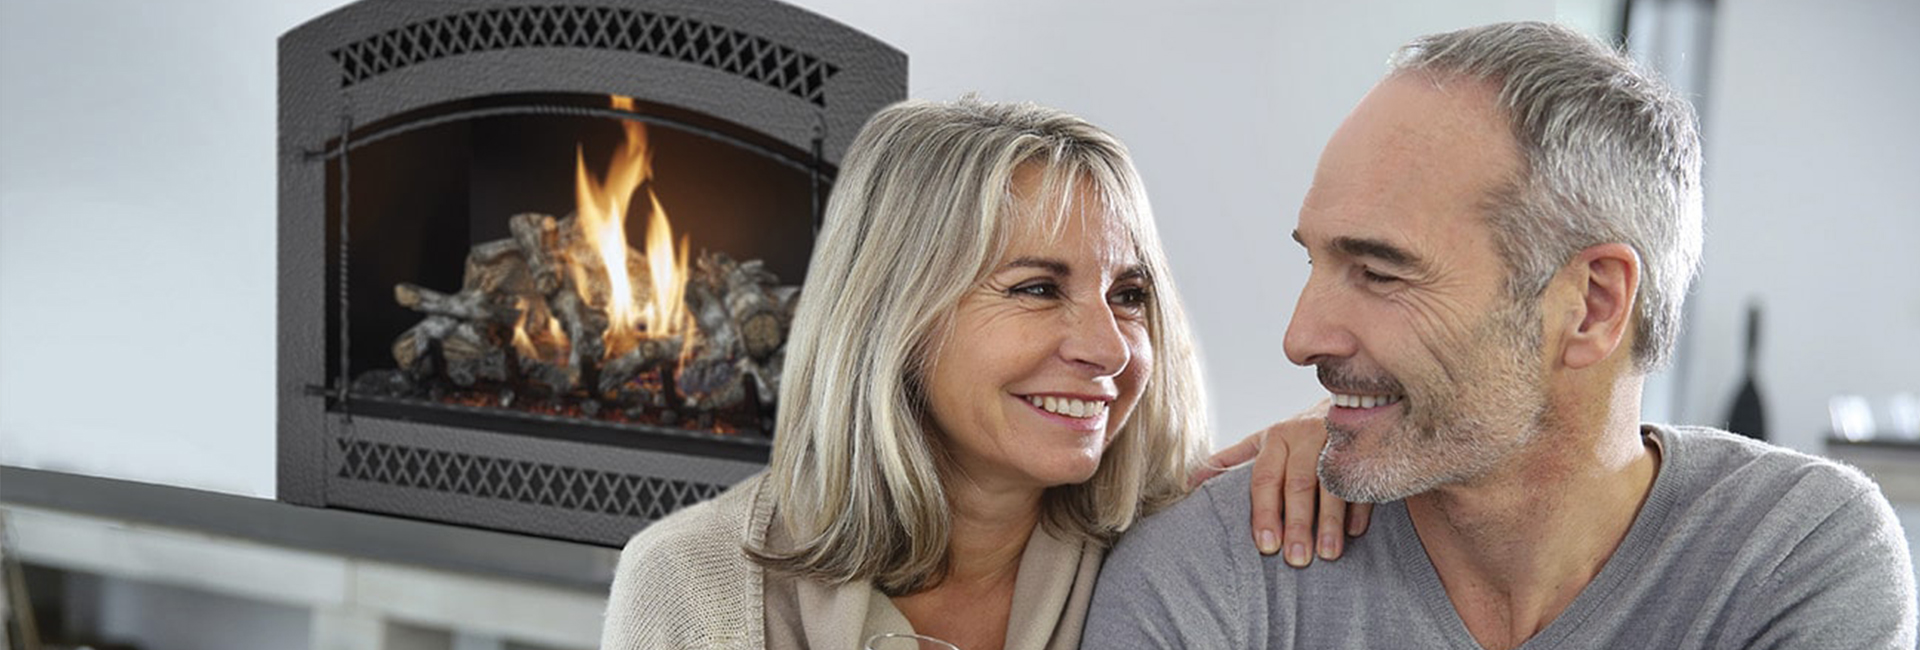 A couple enjoying their fireplace